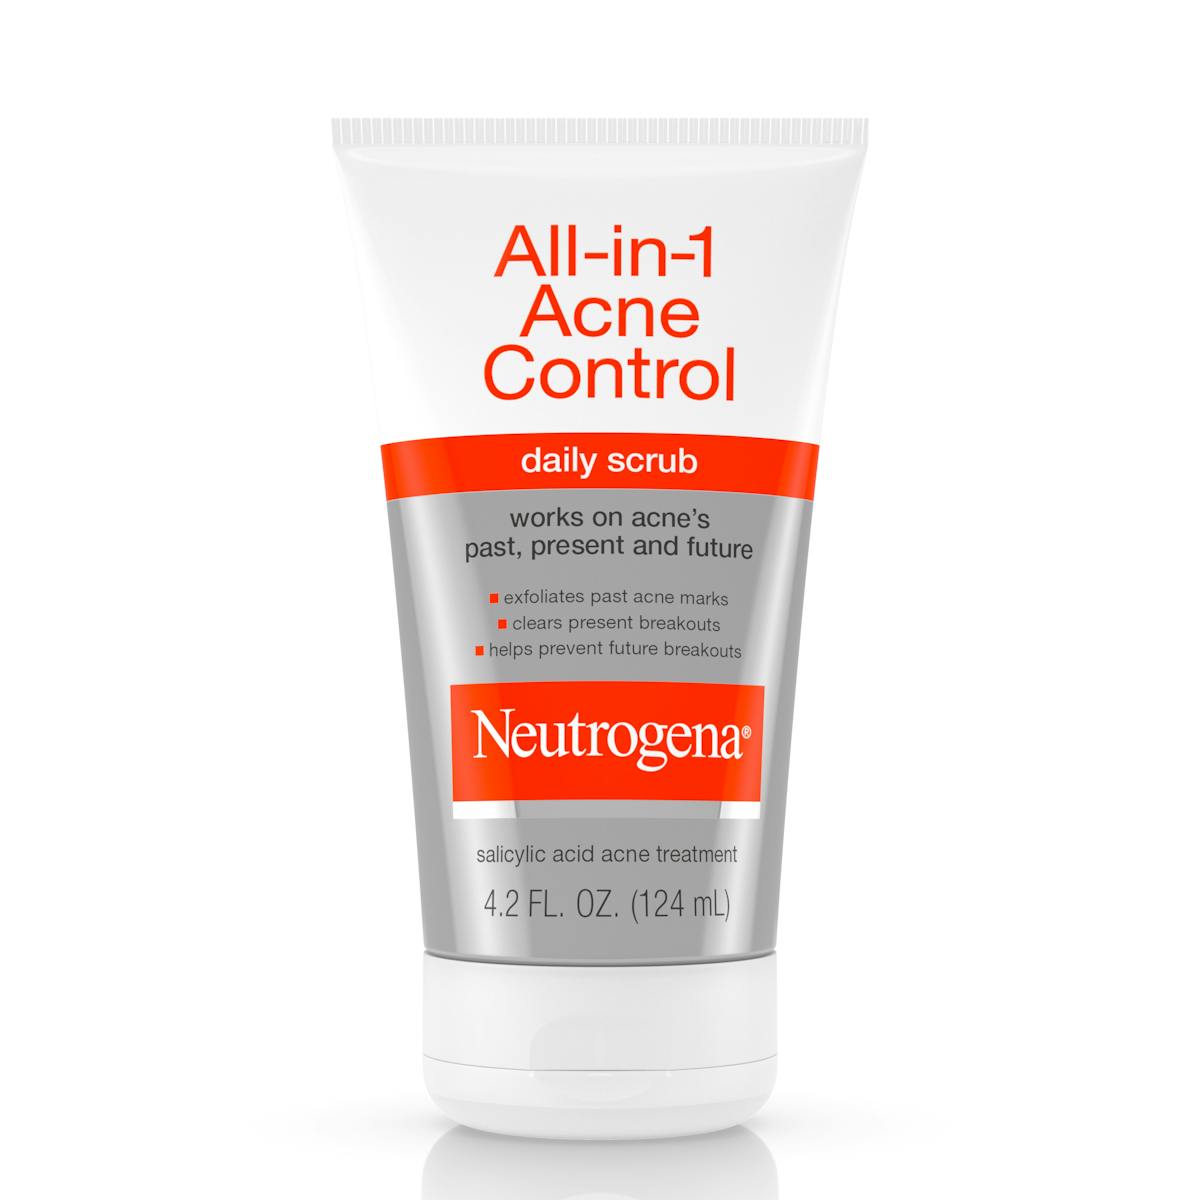 All-in-1 Acne Control Daily Face Scrub